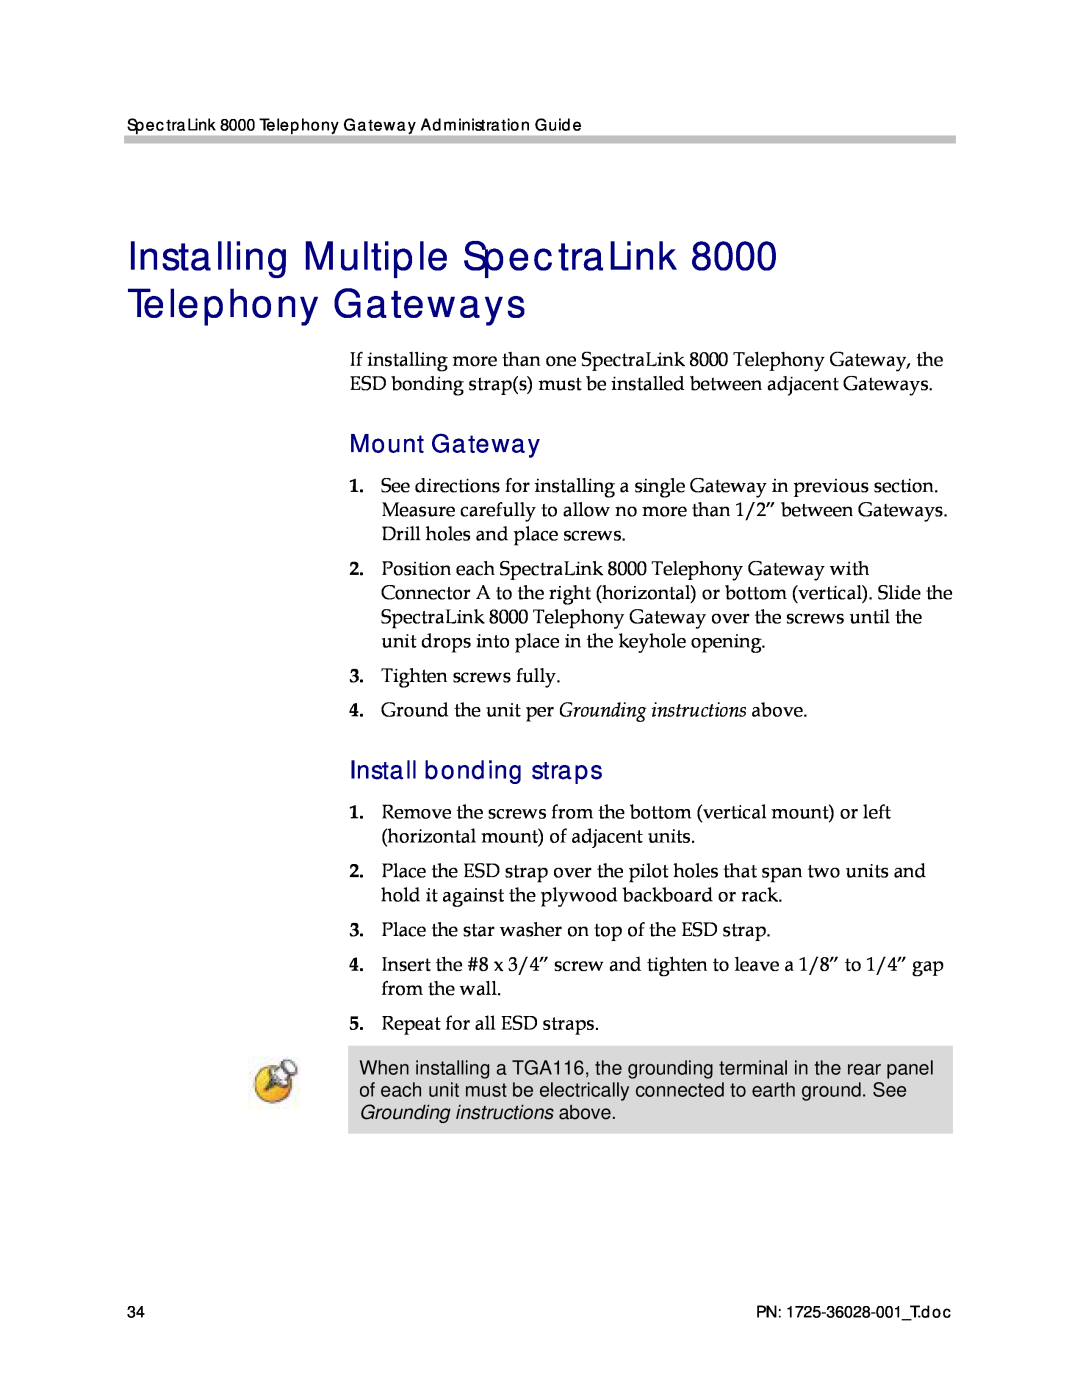 Polycom 1725-36028-001 Installing Multiple SpectraLink 8000 Telephony Gateways, Mount Gateway, Install bonding straps 